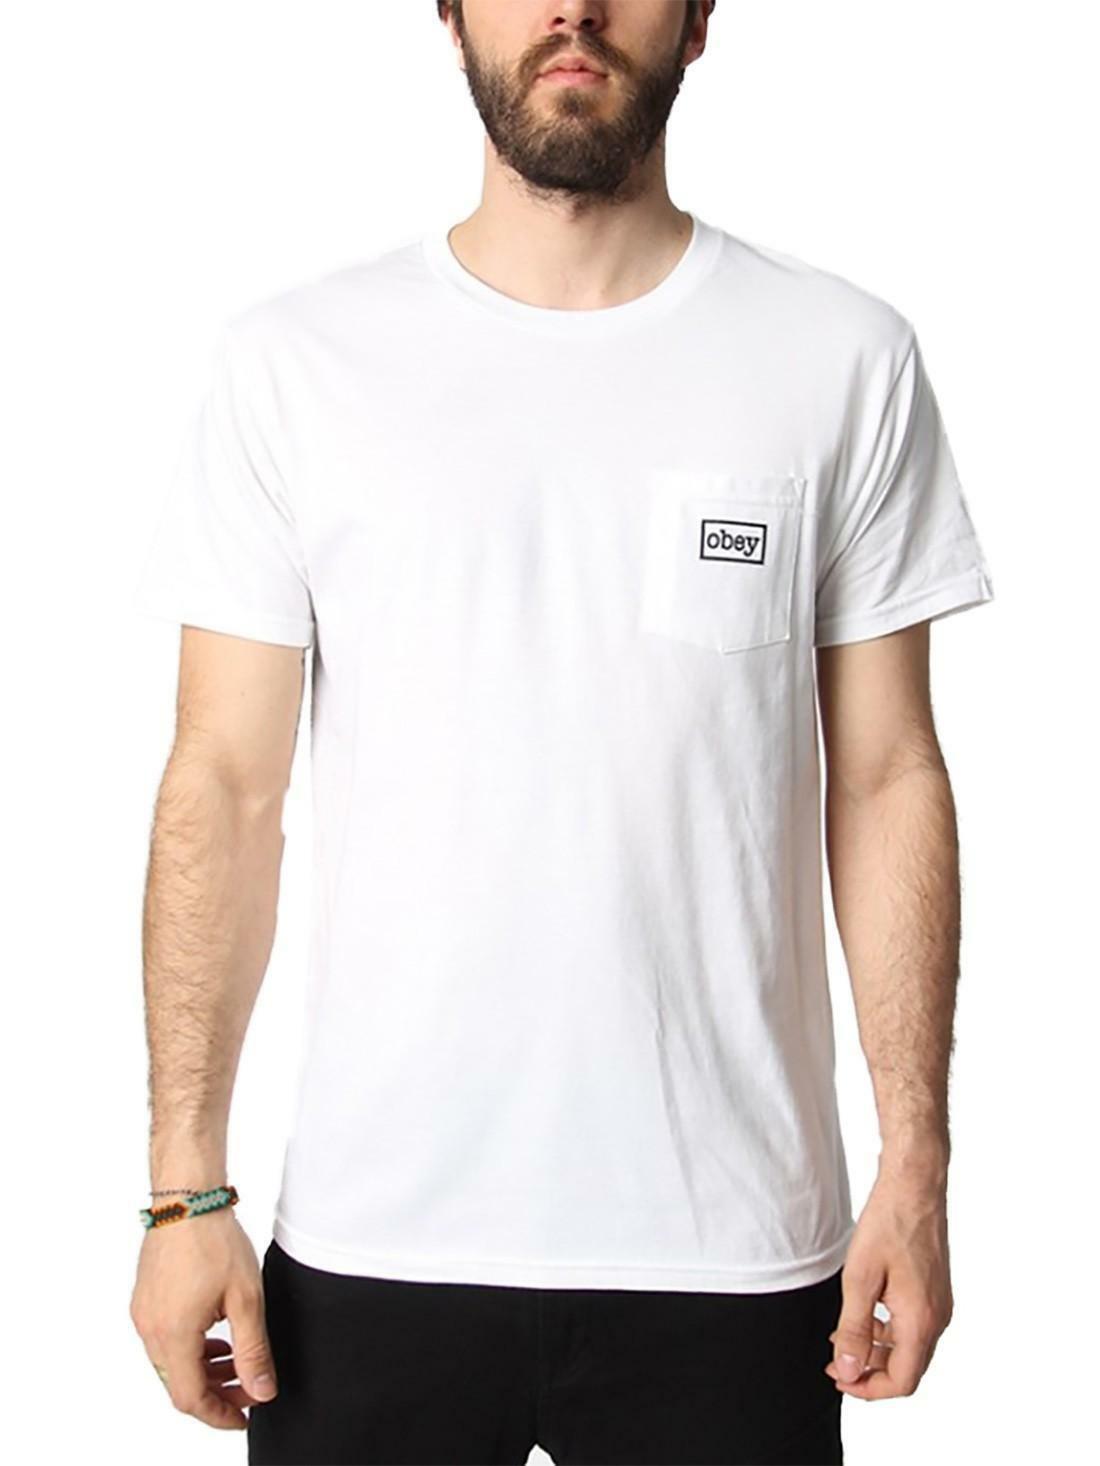 obey obey typewritter t-shirt uomo bianca 165371657wht